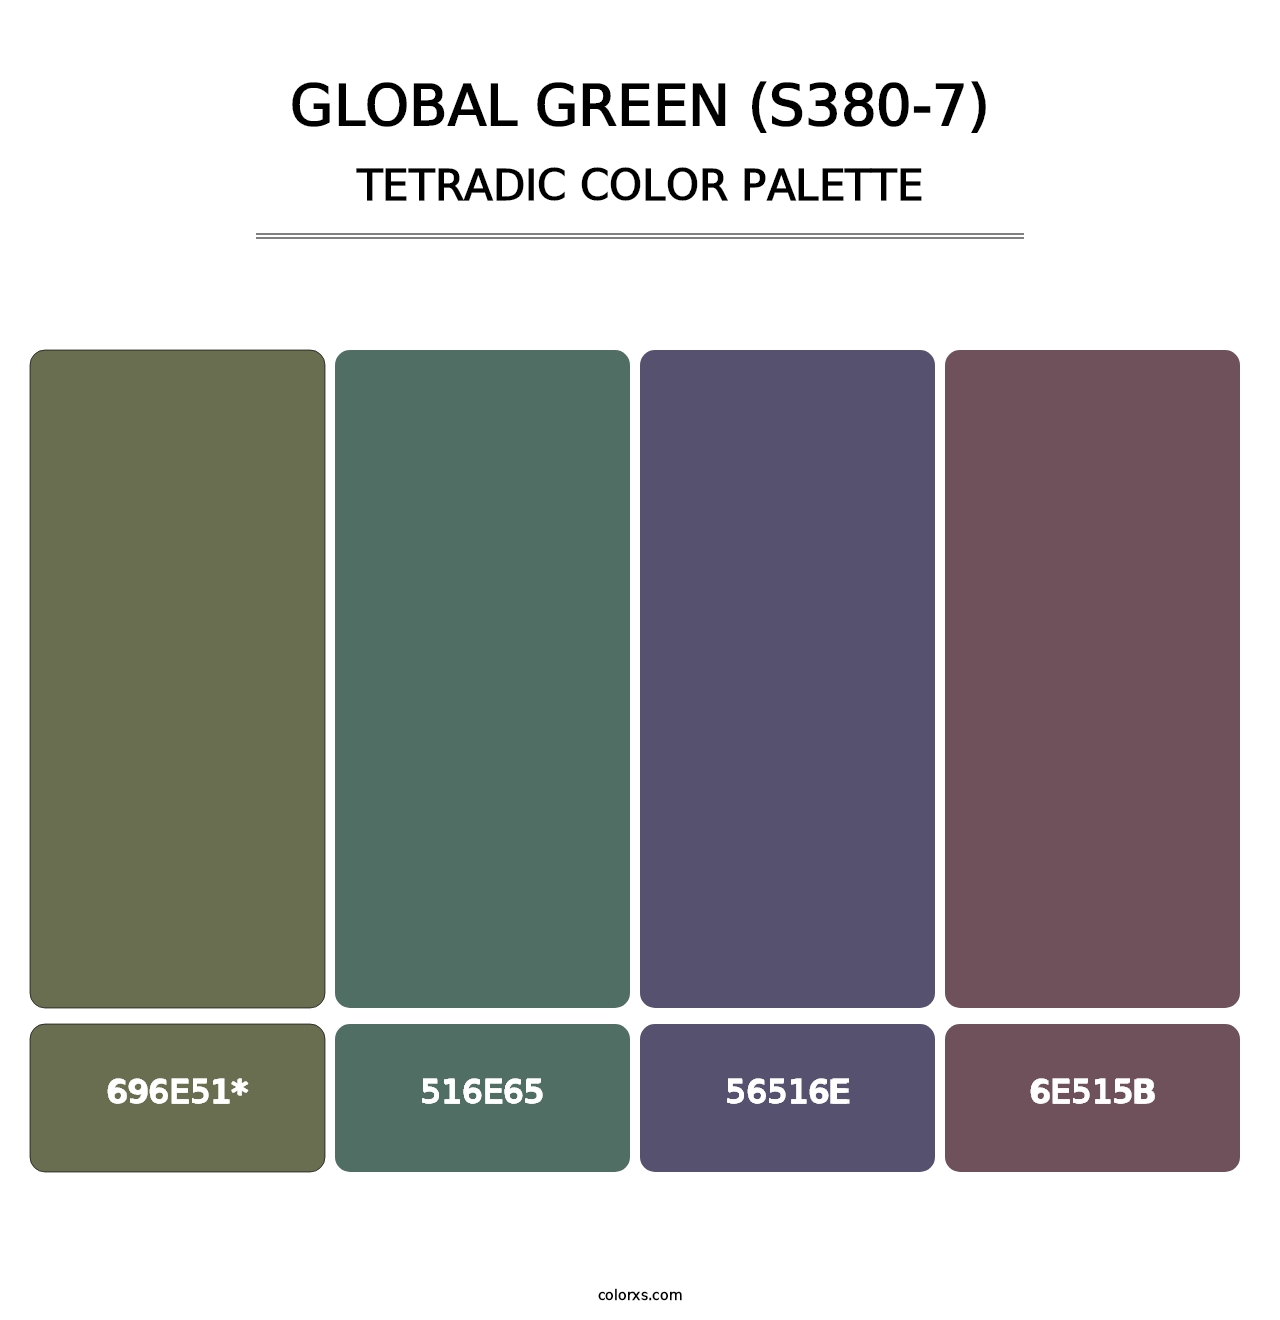 Global Green (S380-7) - Tetradic Color Palette